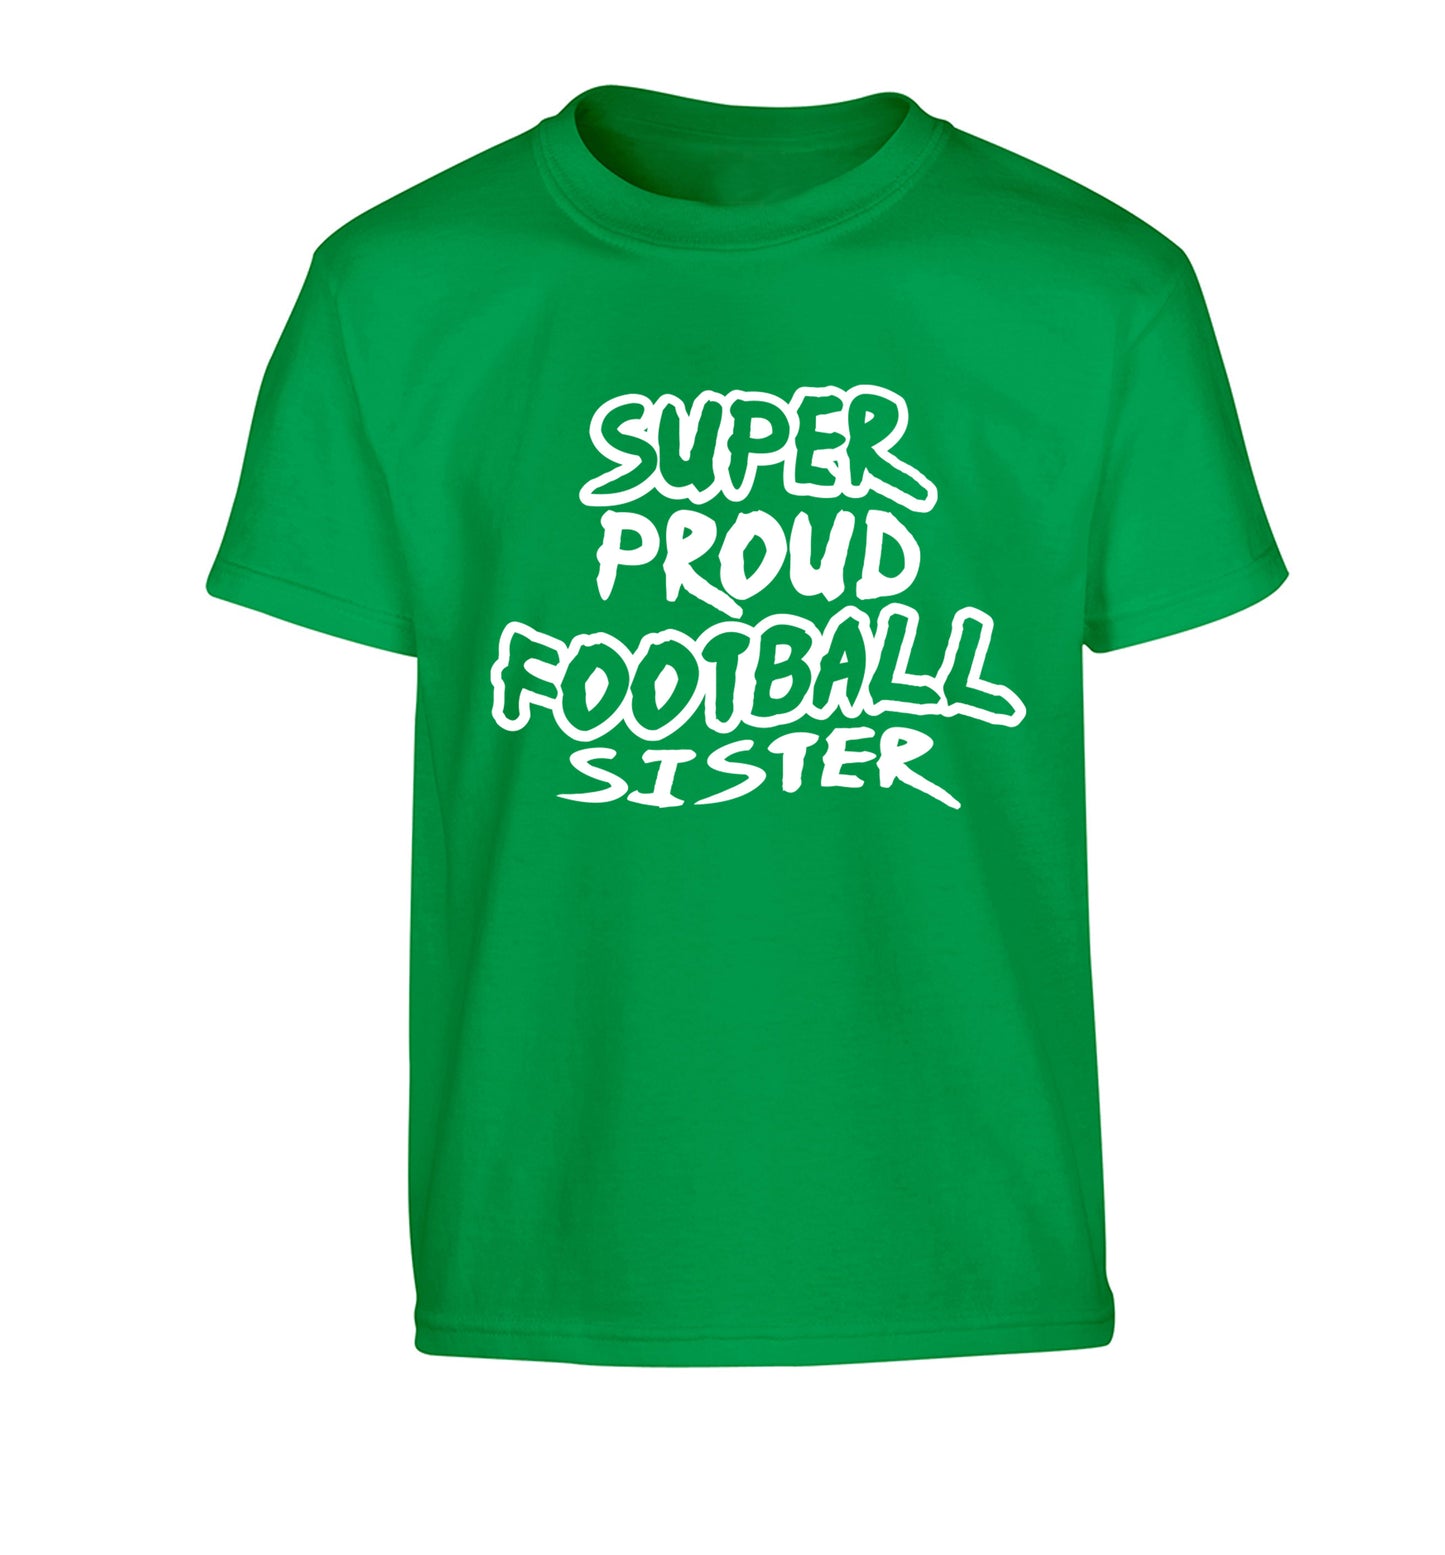 Super proud football sister Children's green Tshirt 12-14 Years